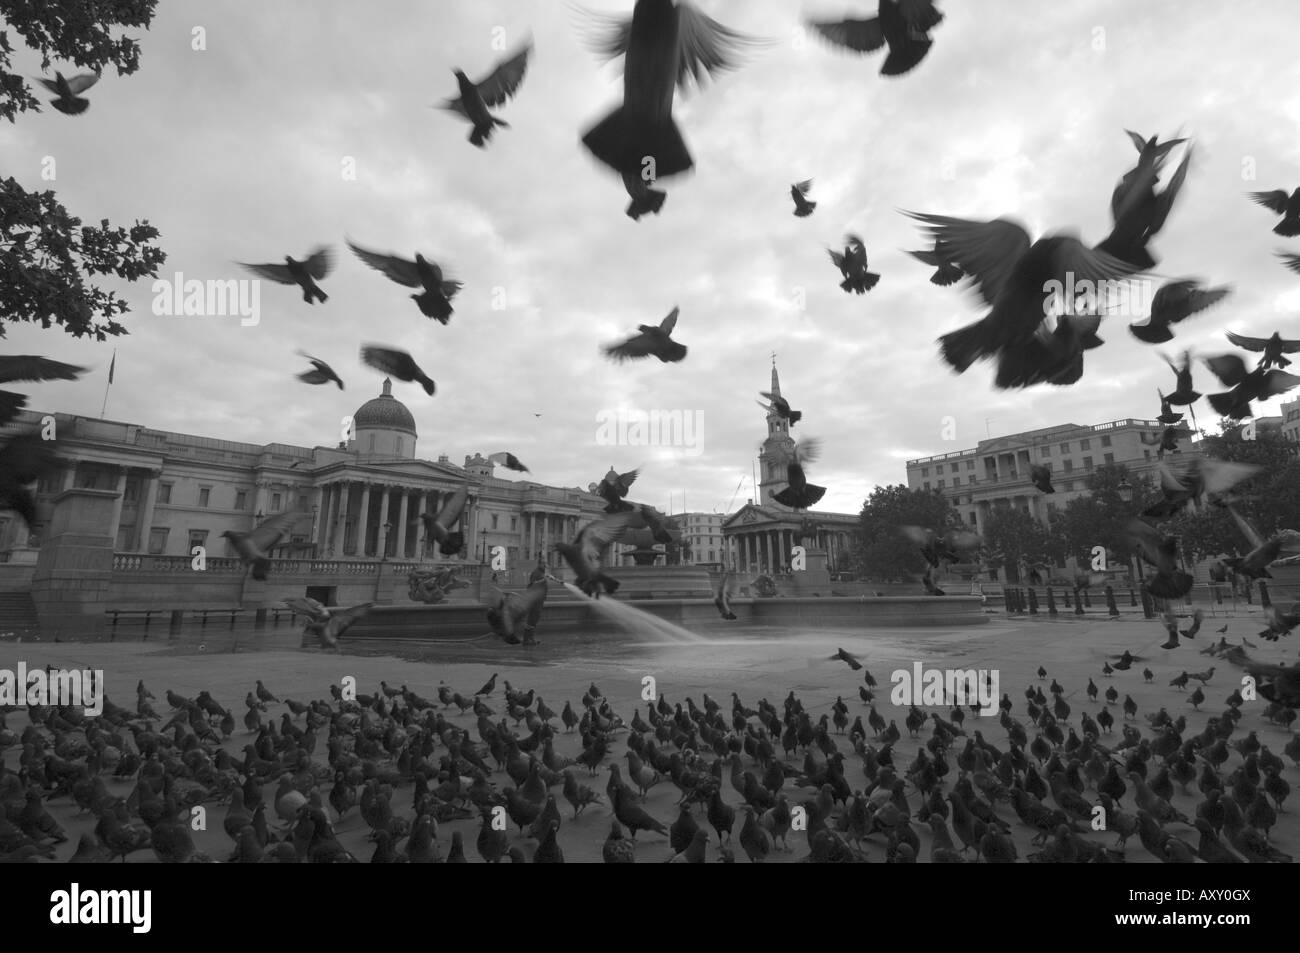 Flocks of pigeons in Trafalgar Square, London, England, United Kingdom, Europe Stock Photo